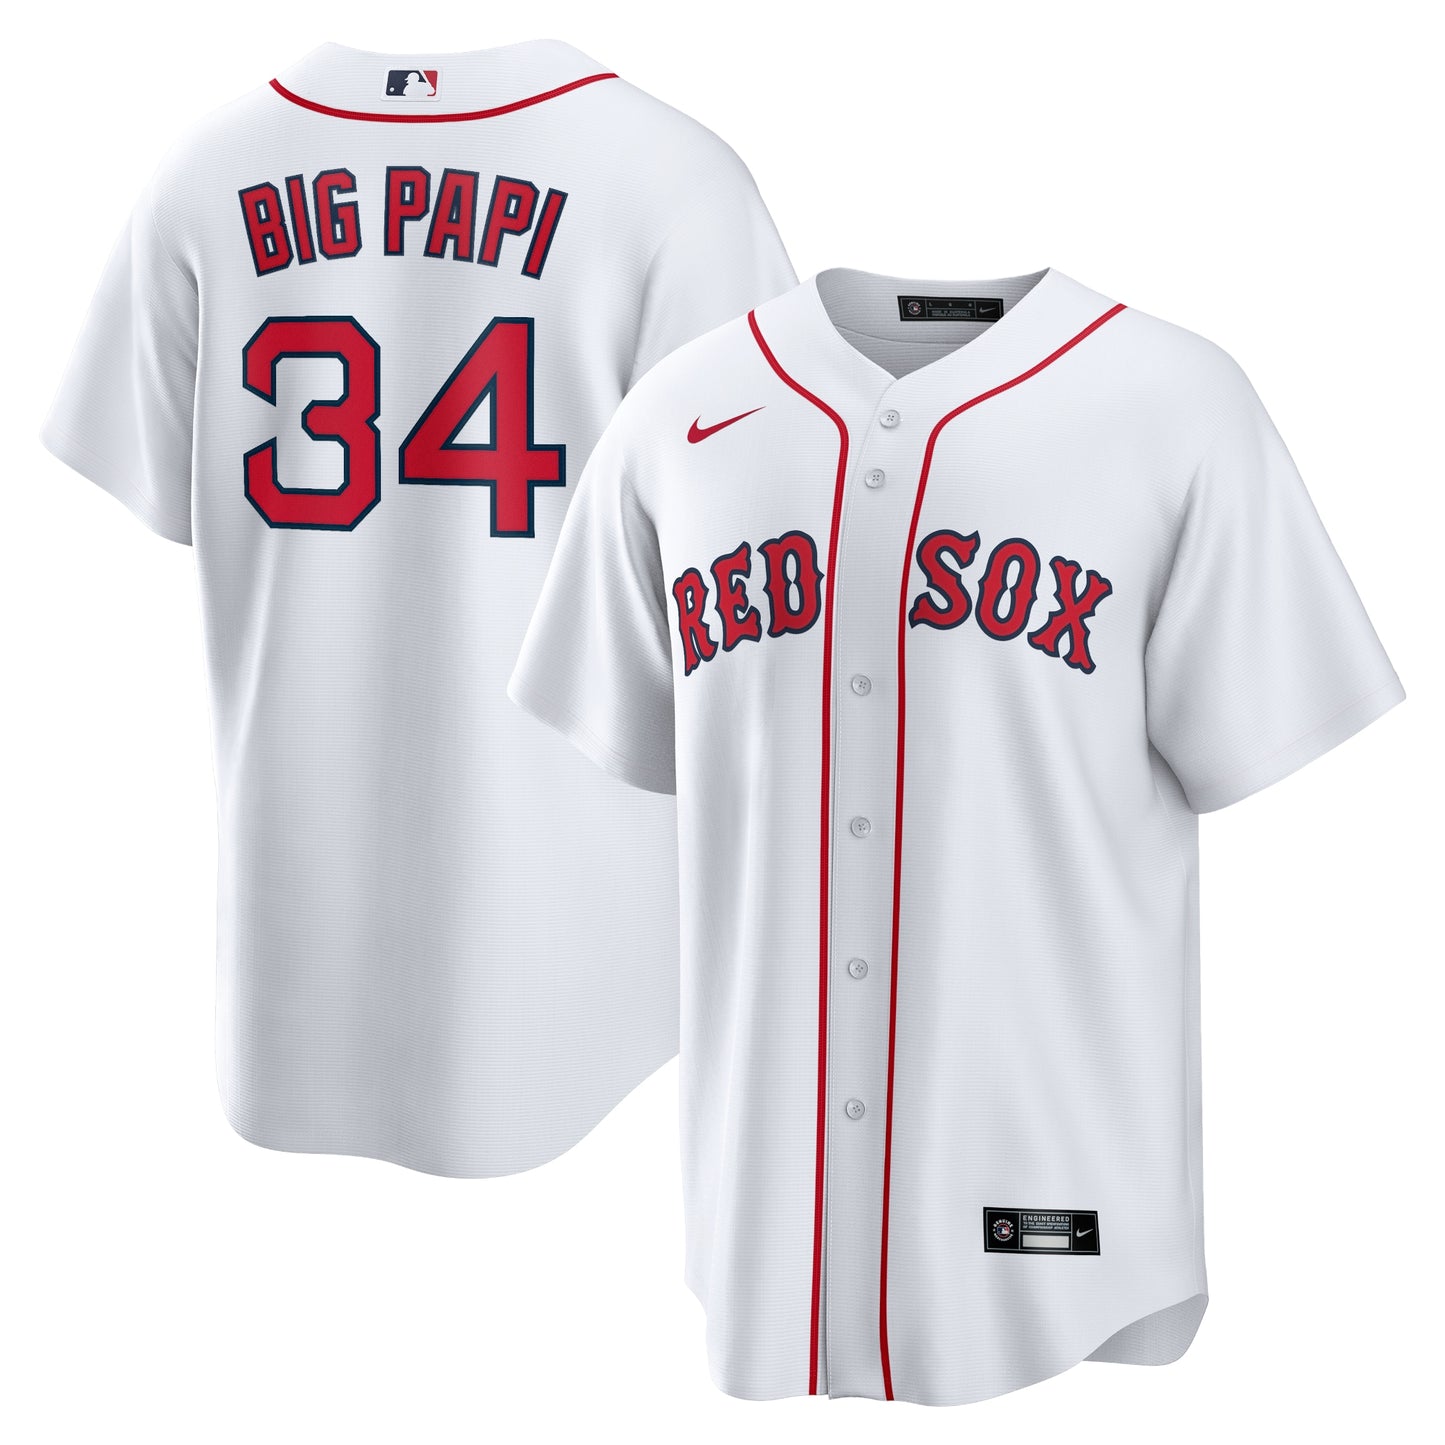 David Ortiz Boston Red Sox Nike Big Papi Replica Jersey - White